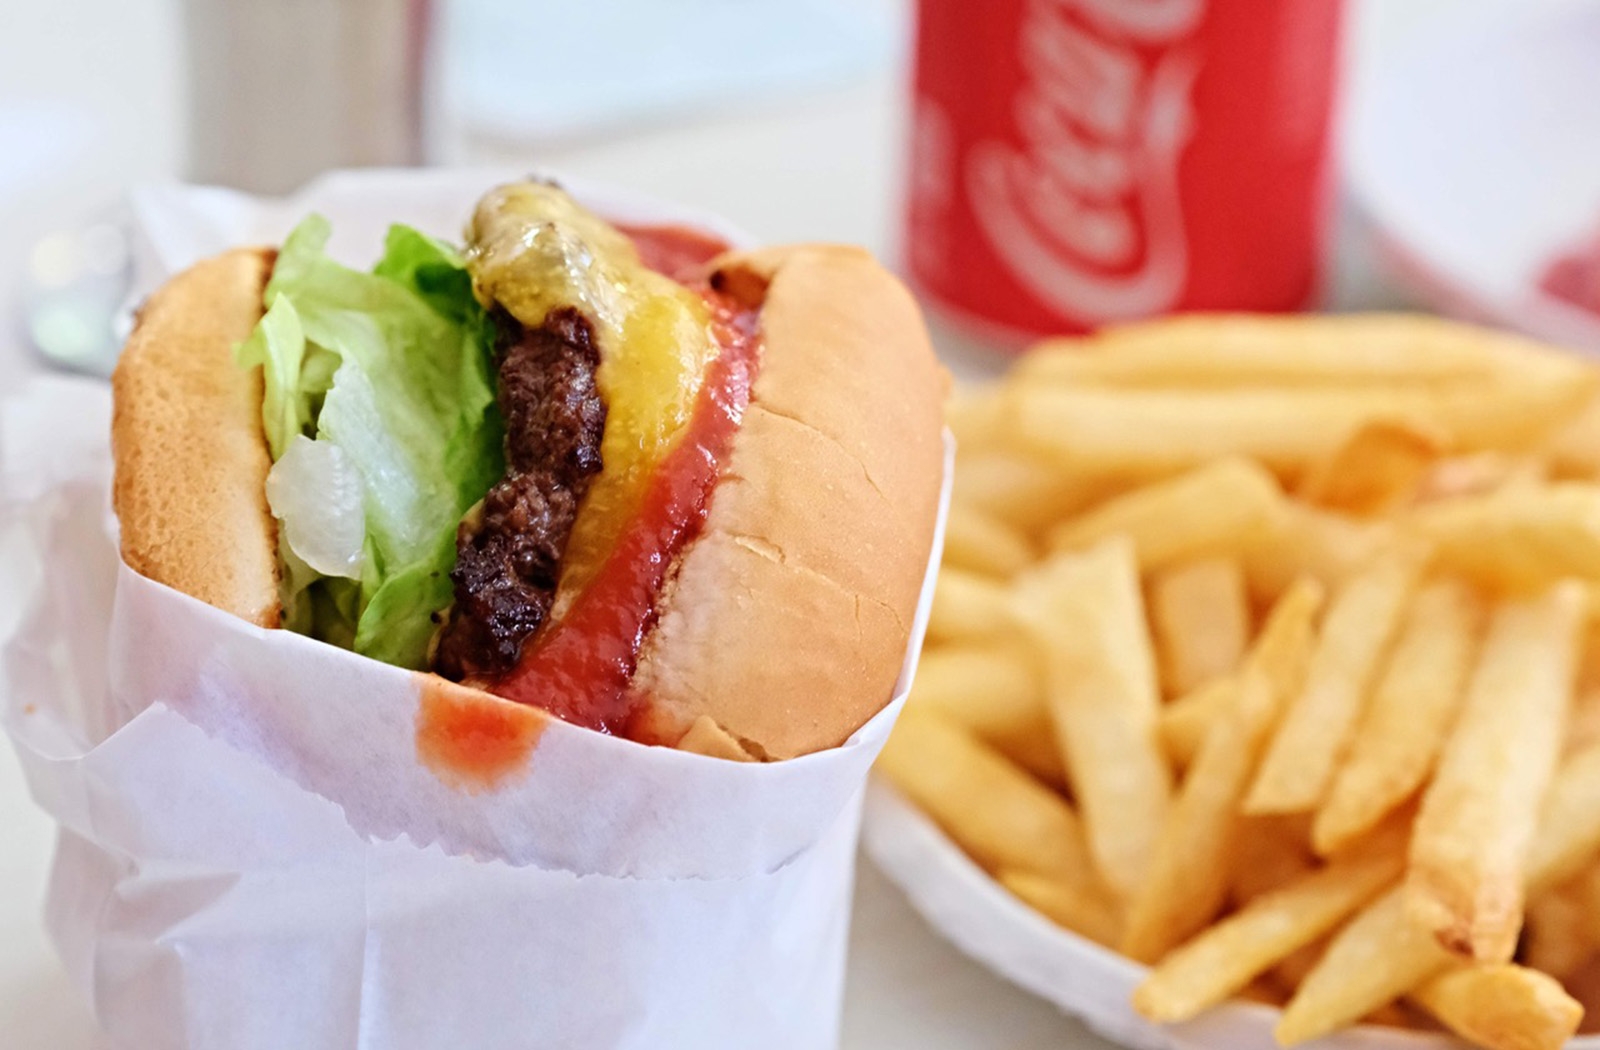 Burger zavání klasikou, ale své dělá vlastní BBQ omáčka, roztavený plátek sýru Tillamook Cheddar, opečená houska, majonéza, naložená okurka a salát